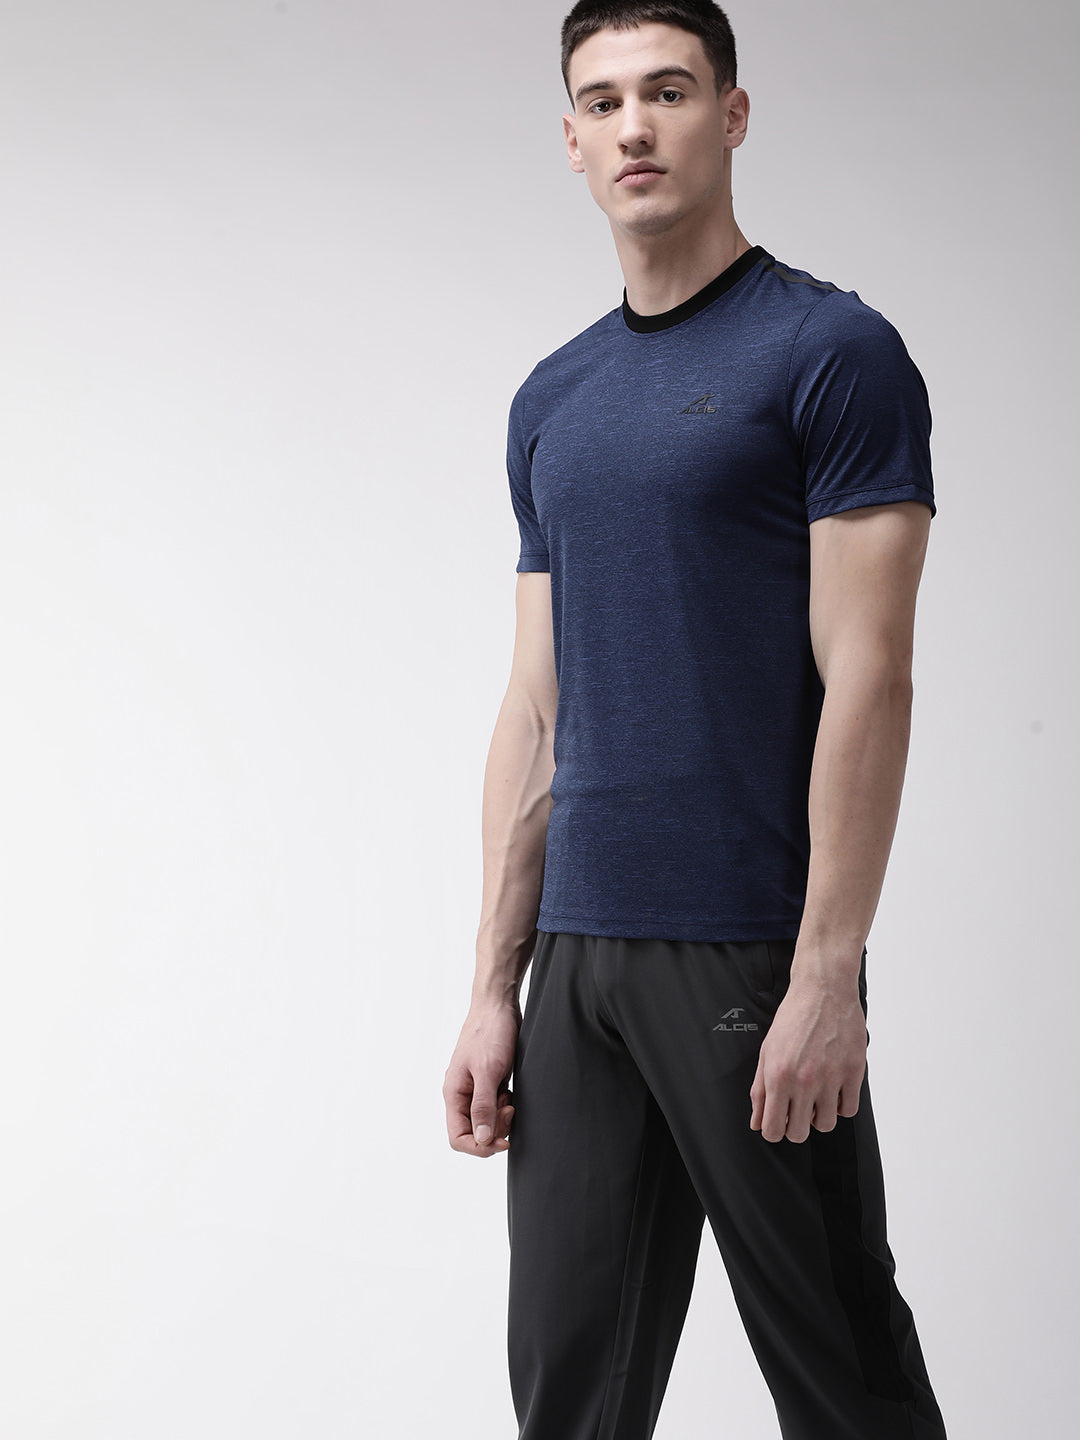 Alcis Men Navy Blue Self Design Round Neck Training T-shirt